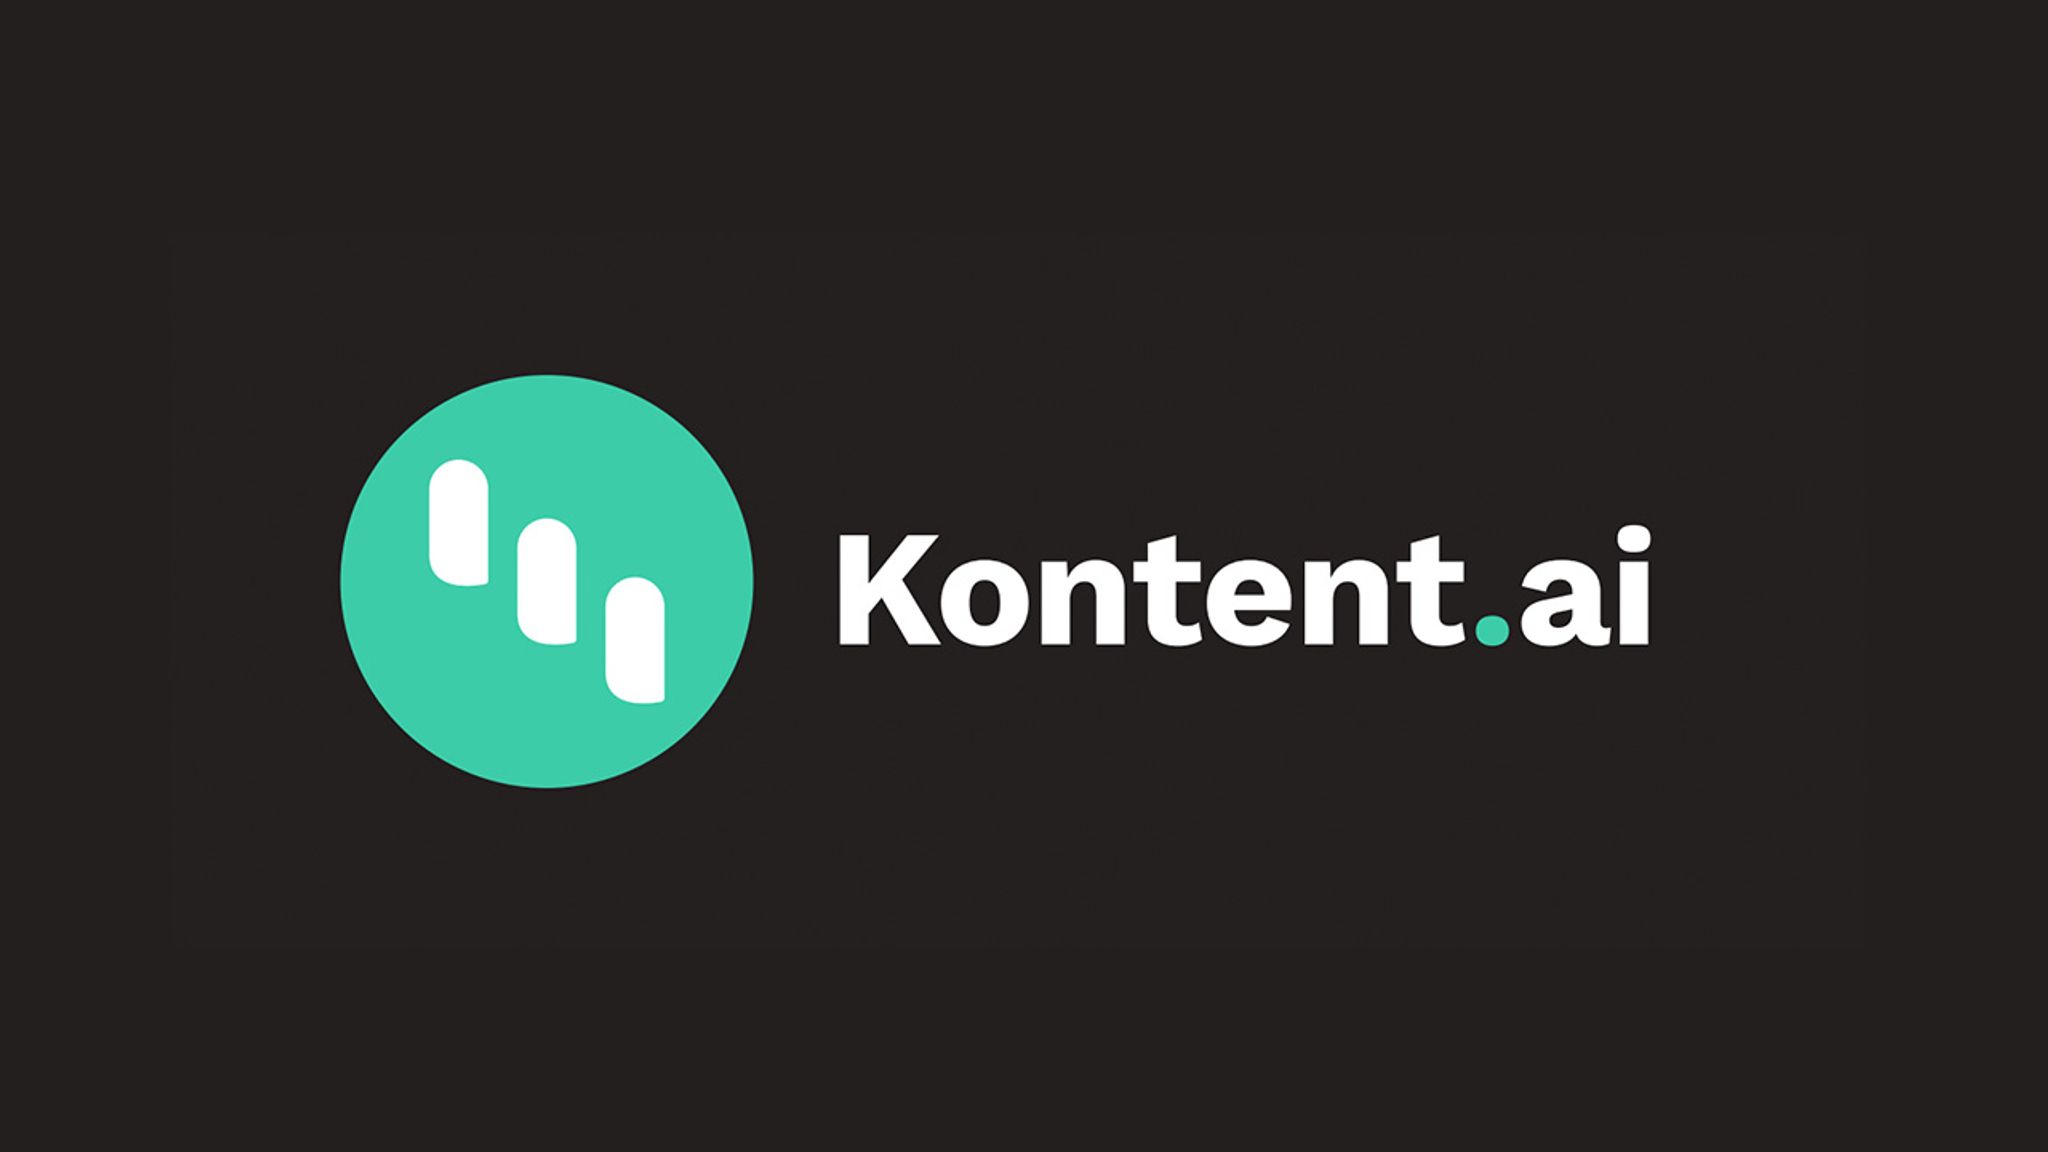 Kontent.ai logo against a black background